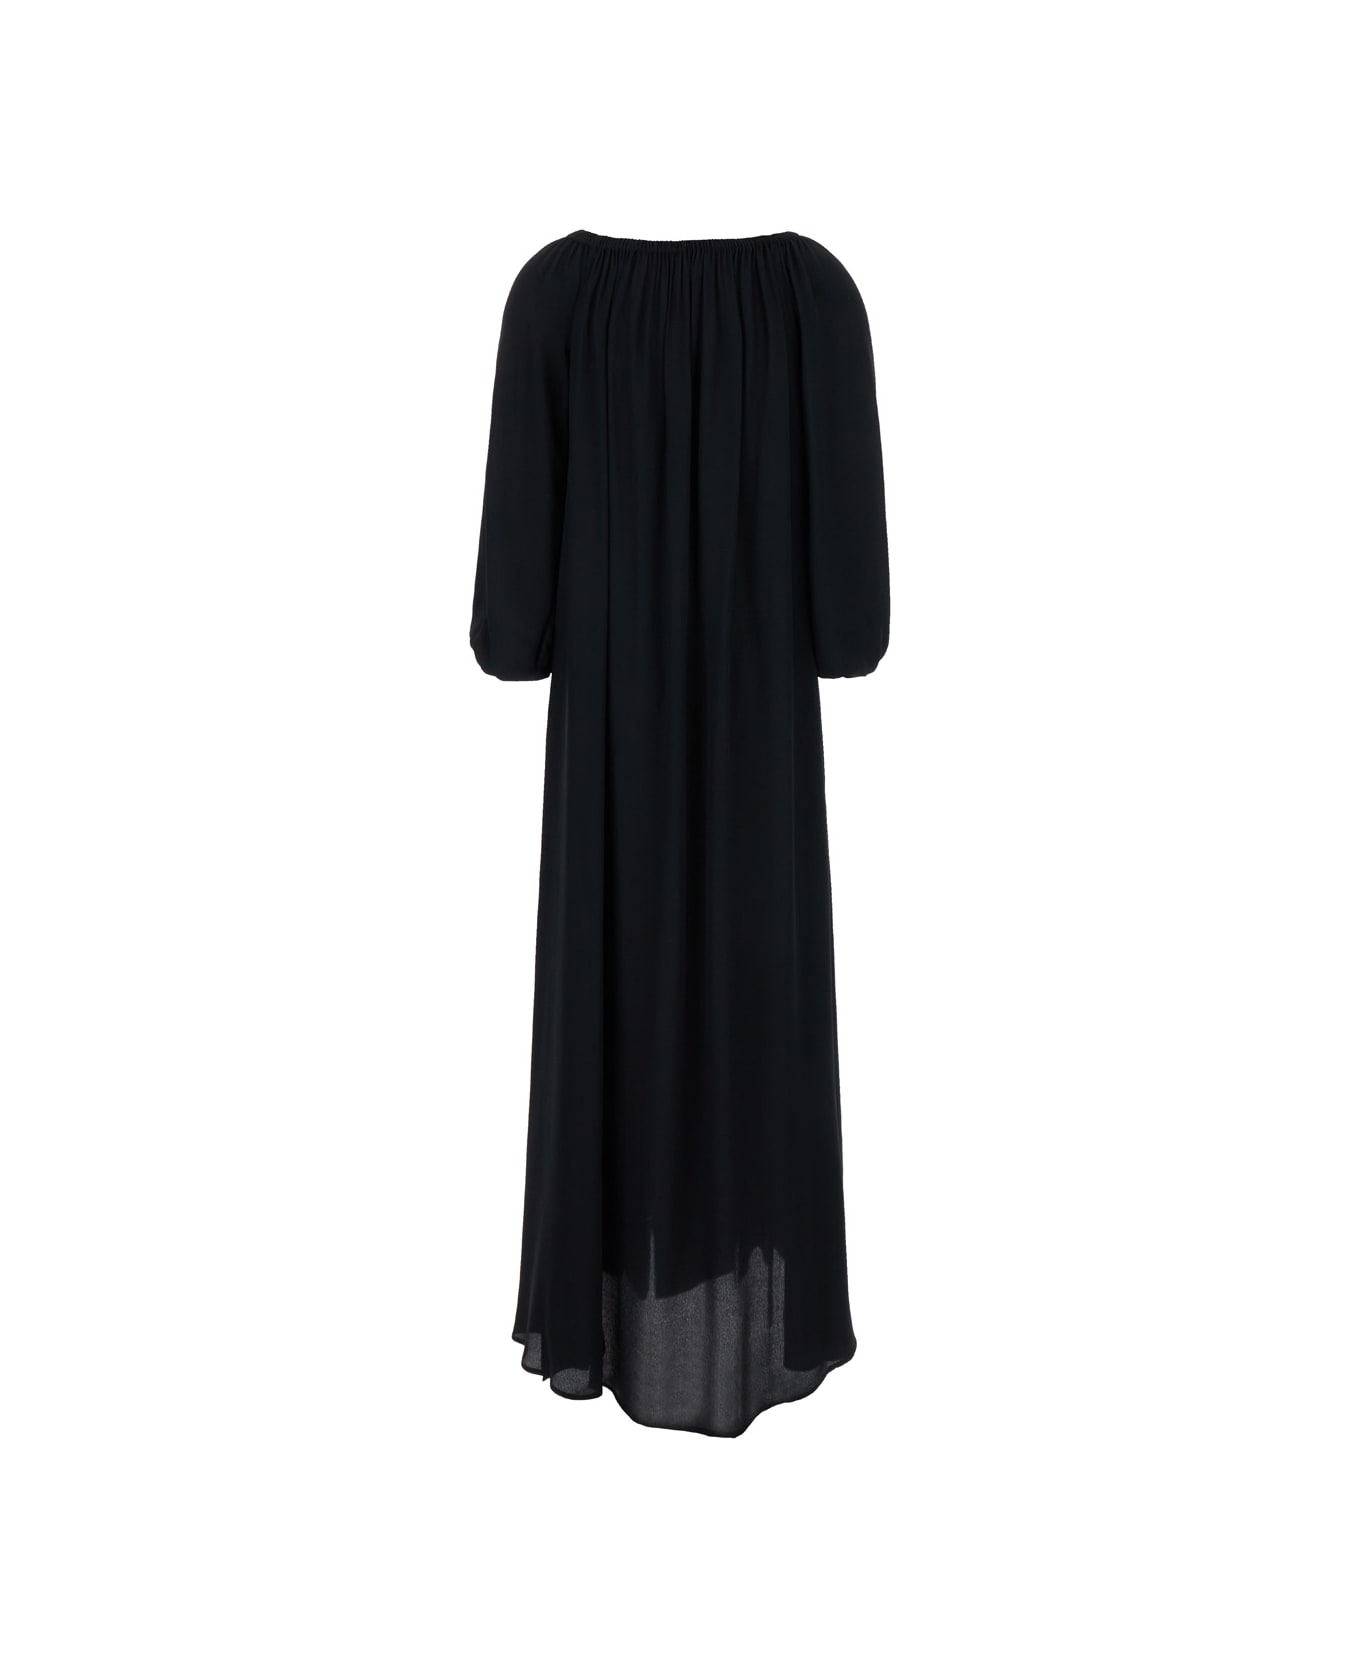 Federica Tosi Black Off Shoulder Maxi Dress In Silk Blend Woman - Black